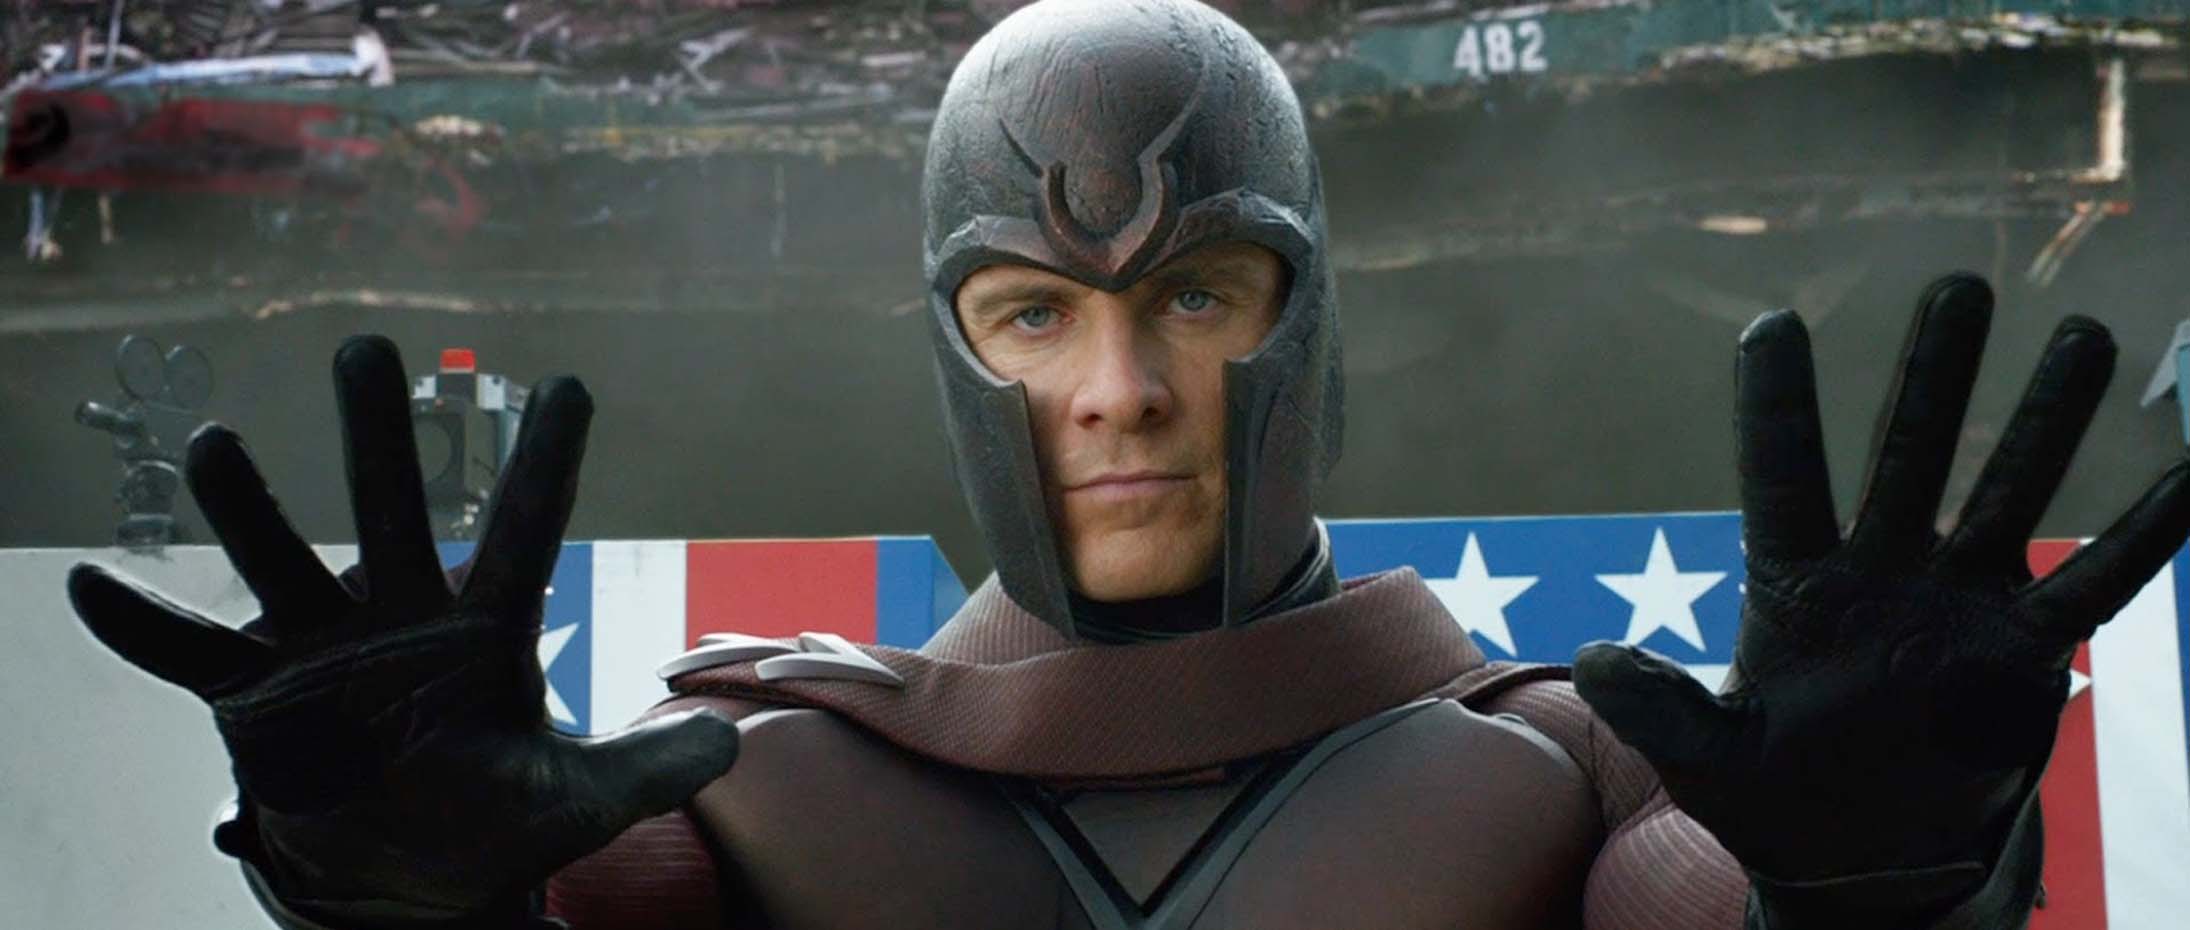 Por causa de Loki? Magneto de X-Men viraliza no Twitter